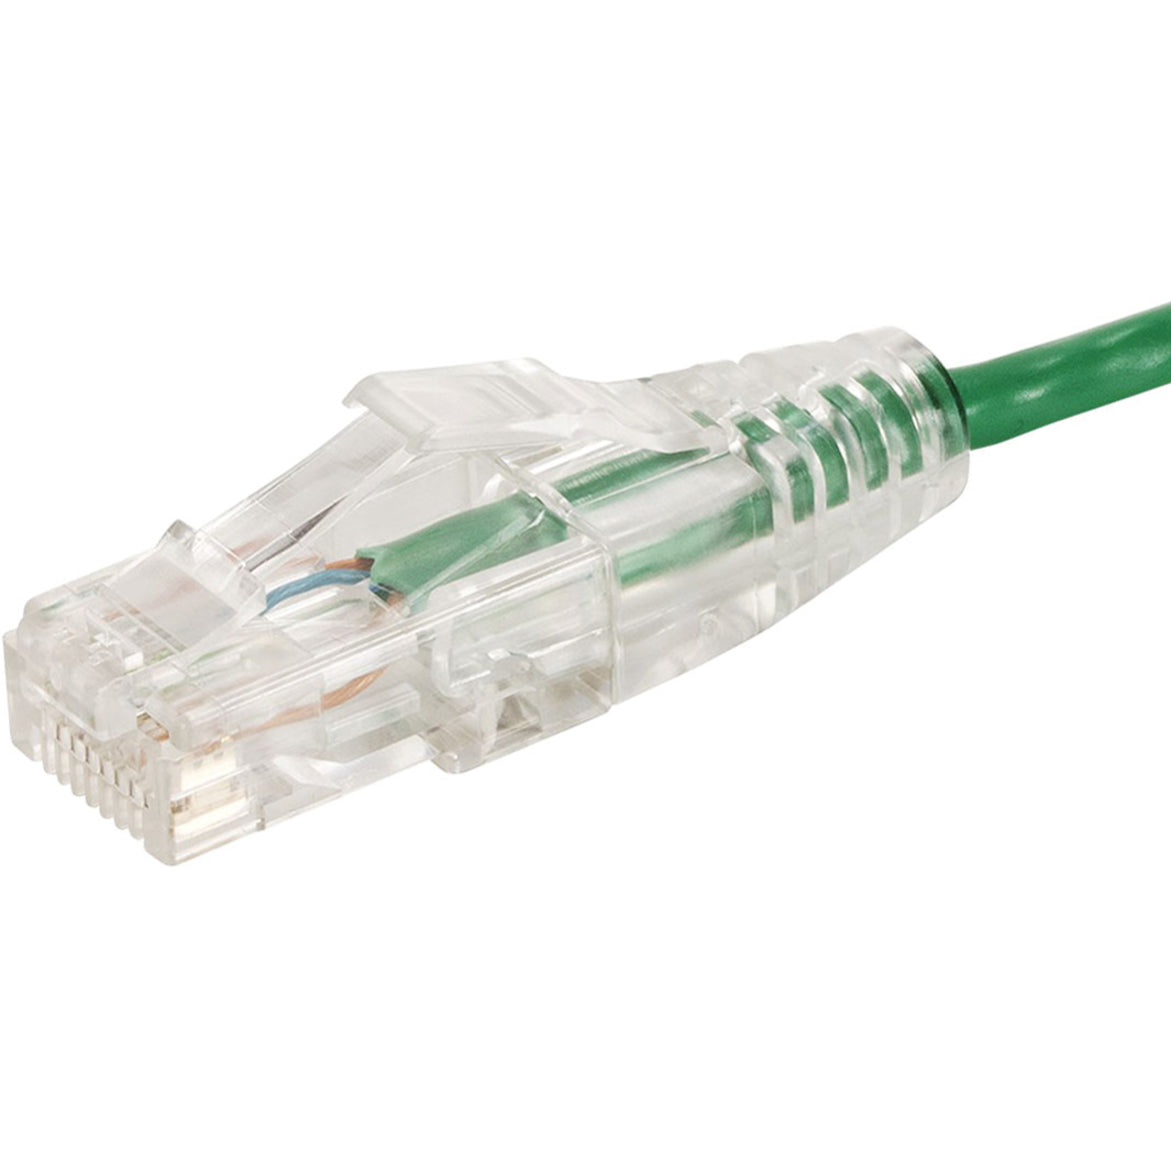 Monoprice 14795 SlimRun Cat6 28AWG UTP Ethernet Network Cable, 1ft Green, Flexible, Snagless